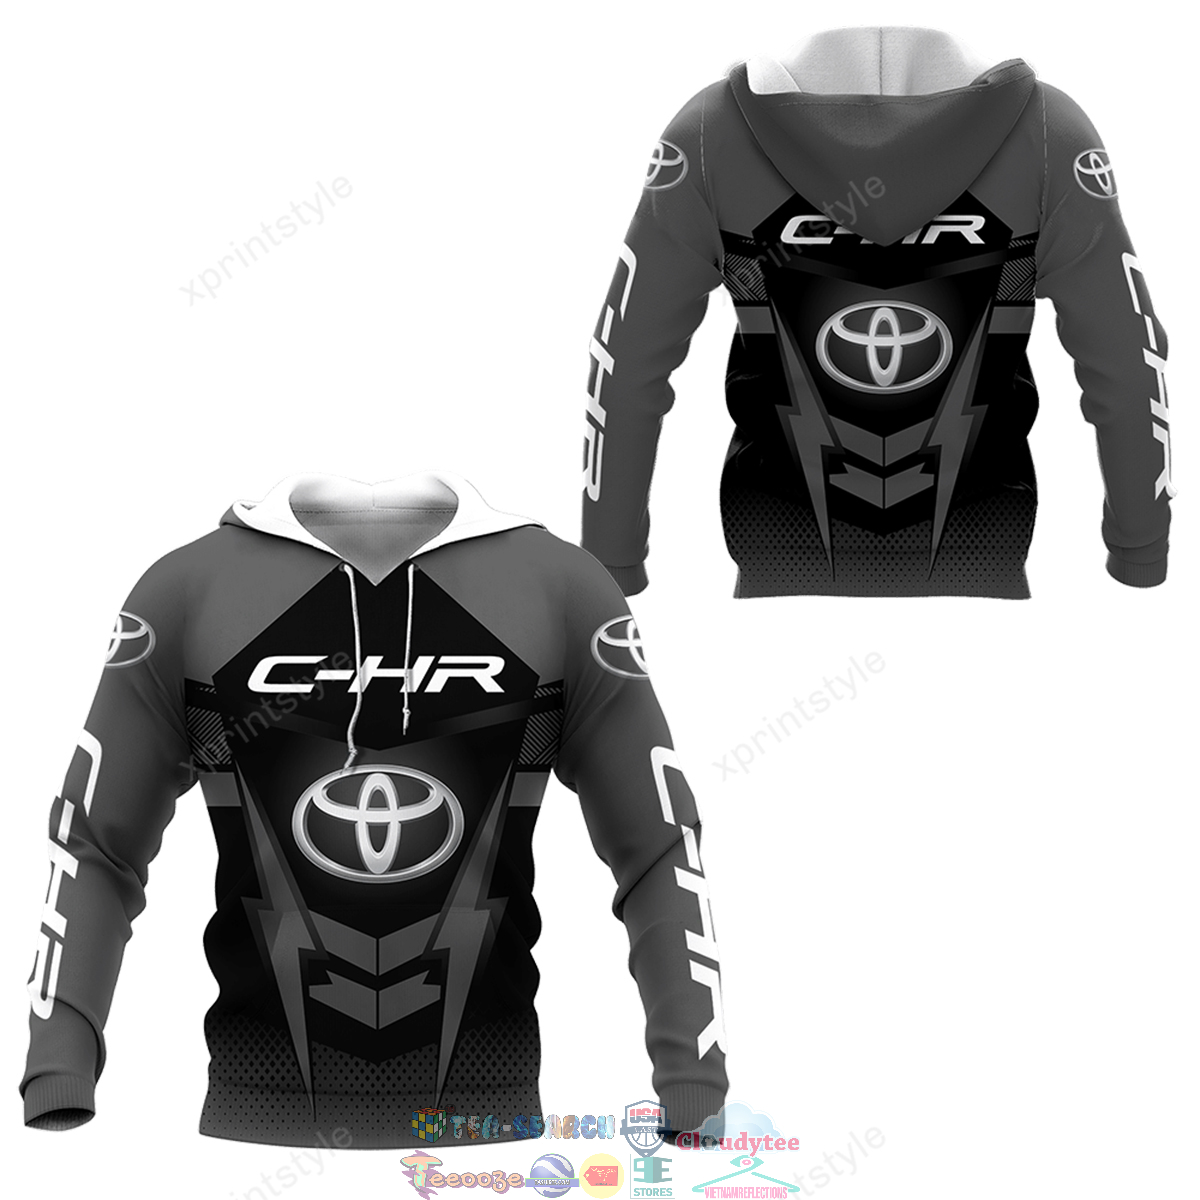 Toyota C-HR ver 2 3D hoodie and t-shirt – Saleoff